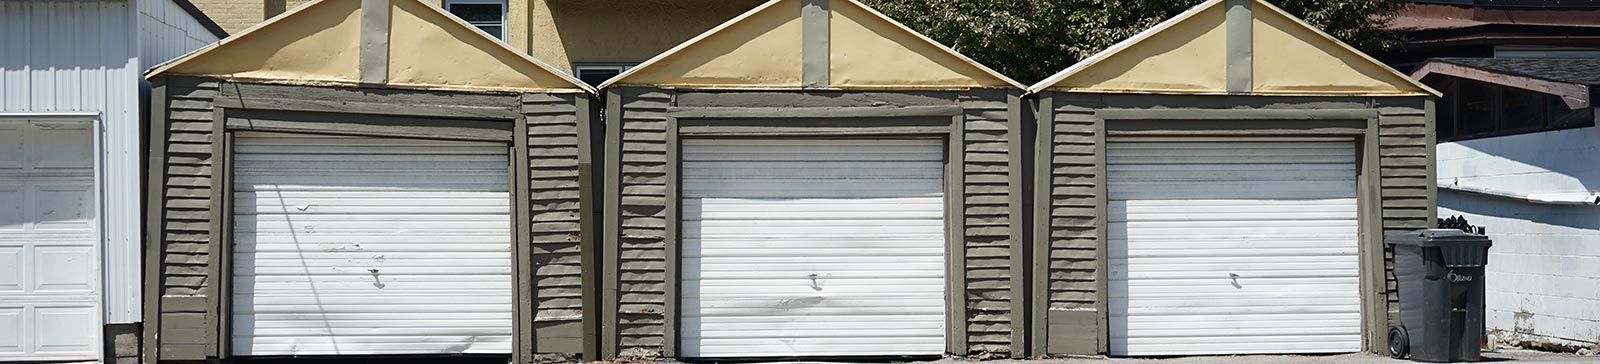 Garage Door Repair Near Me | Cypress, CA